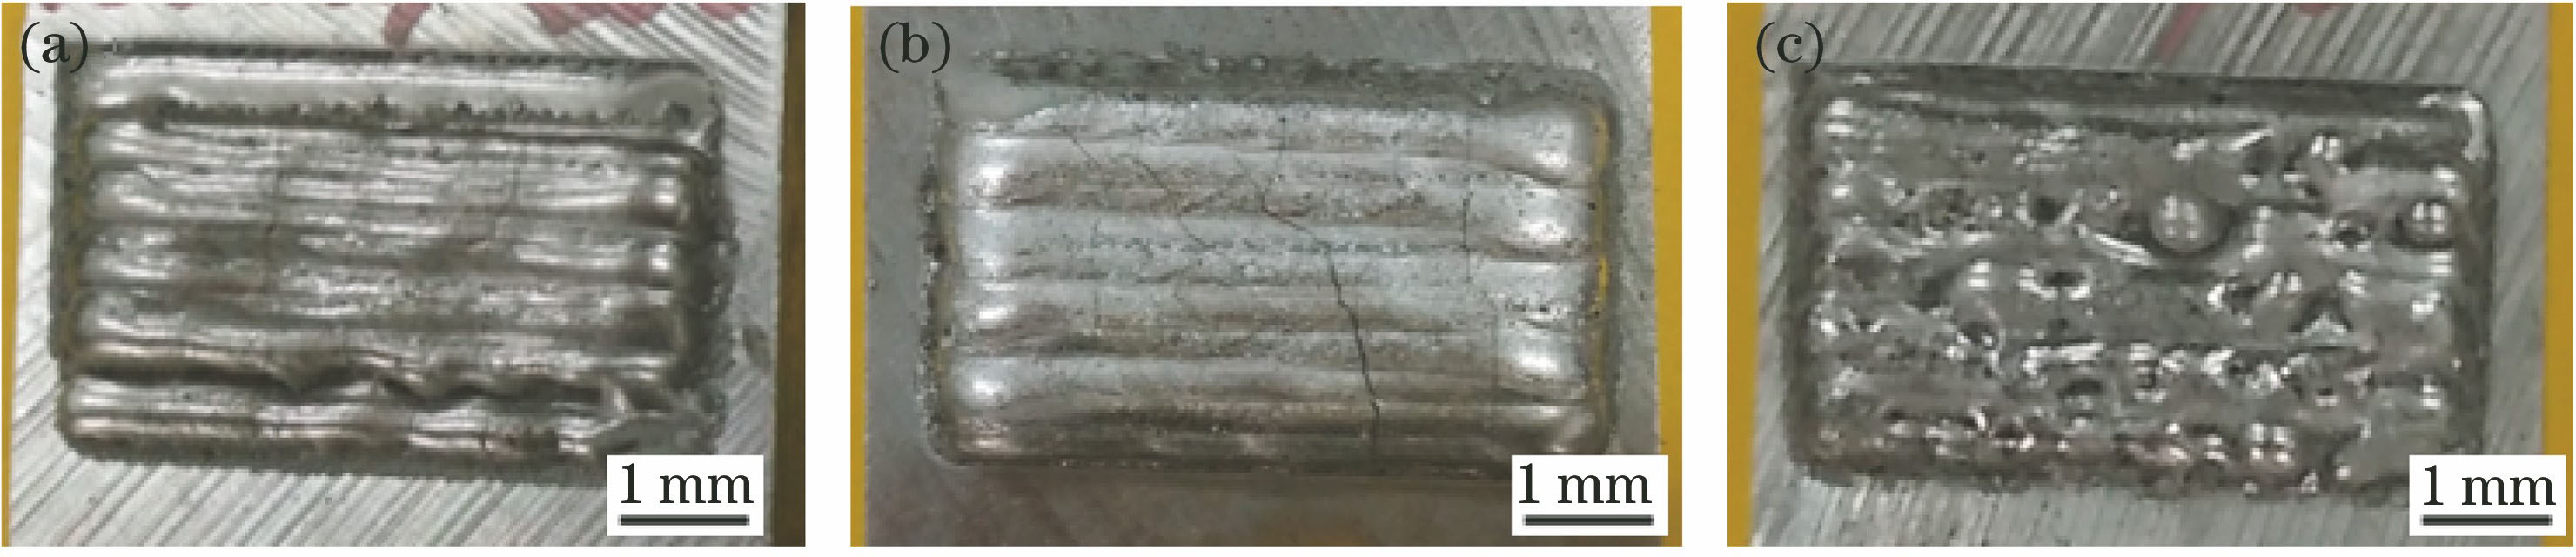 Surface morphologies of Fe-based alloy samples formed by laser rapid forming under different scanning speeds. (a) 400 mm·min-1; (b) 600 mm·min-1; (c) 1000 mm·min-1